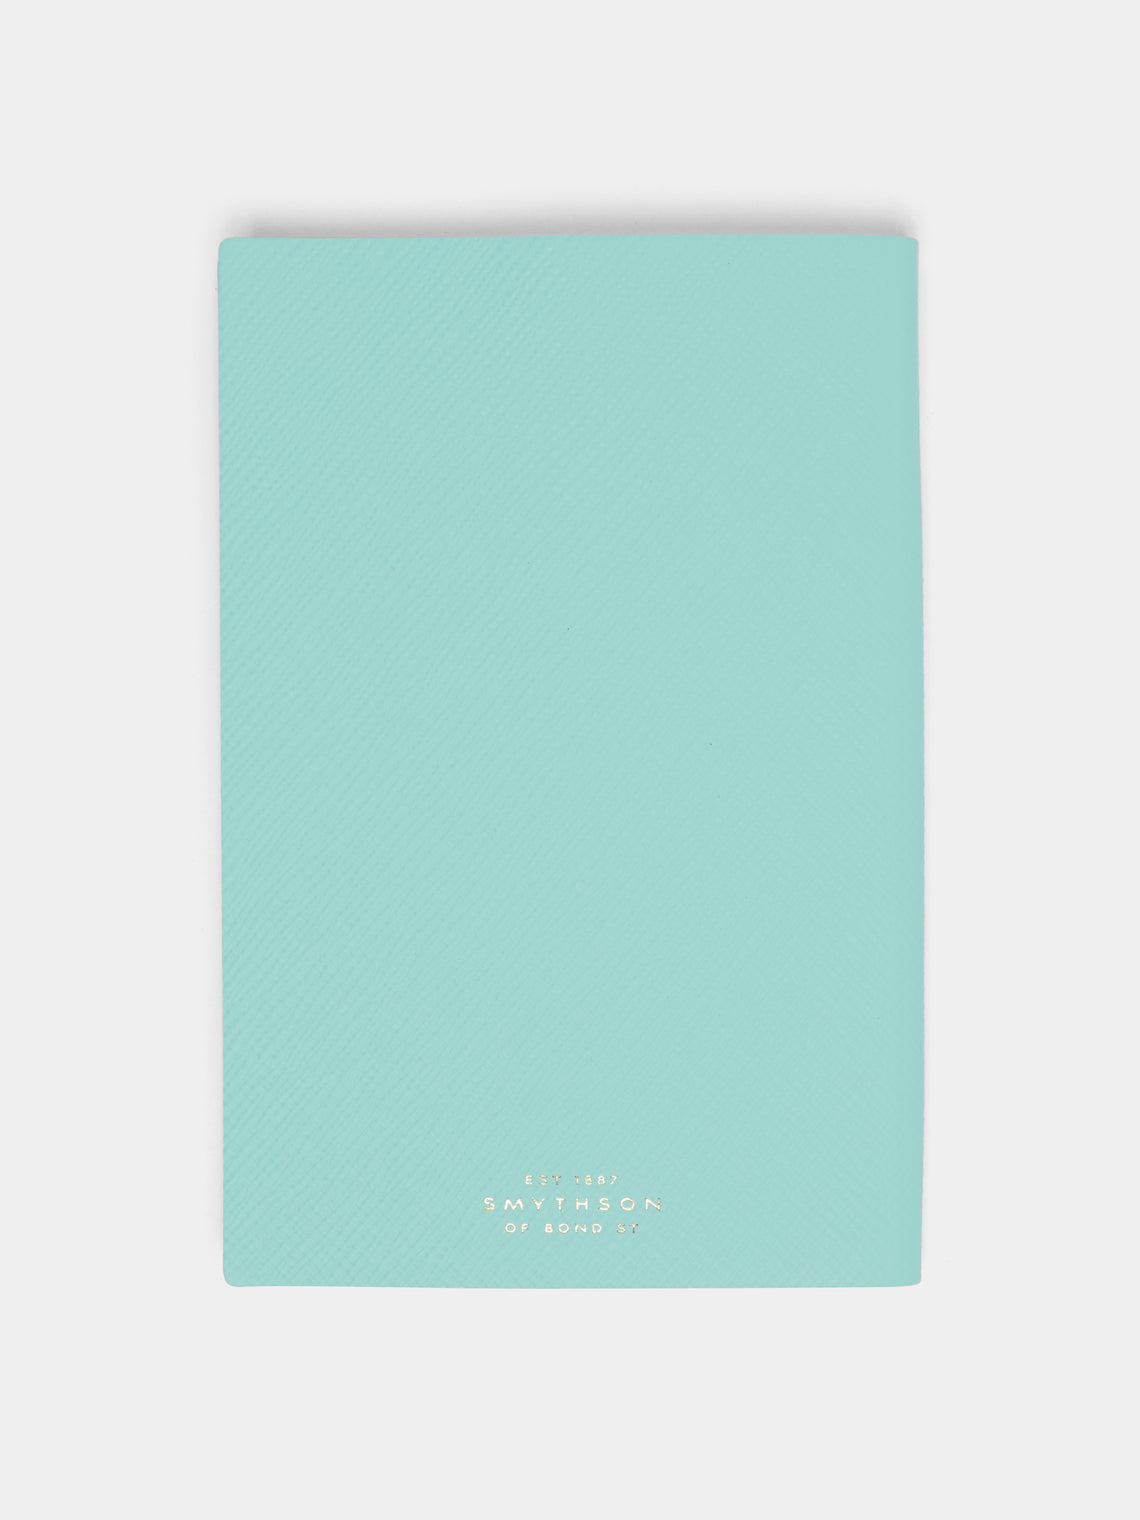 Smythson - Chelsea Leather Notebook - Light Green - ABASK